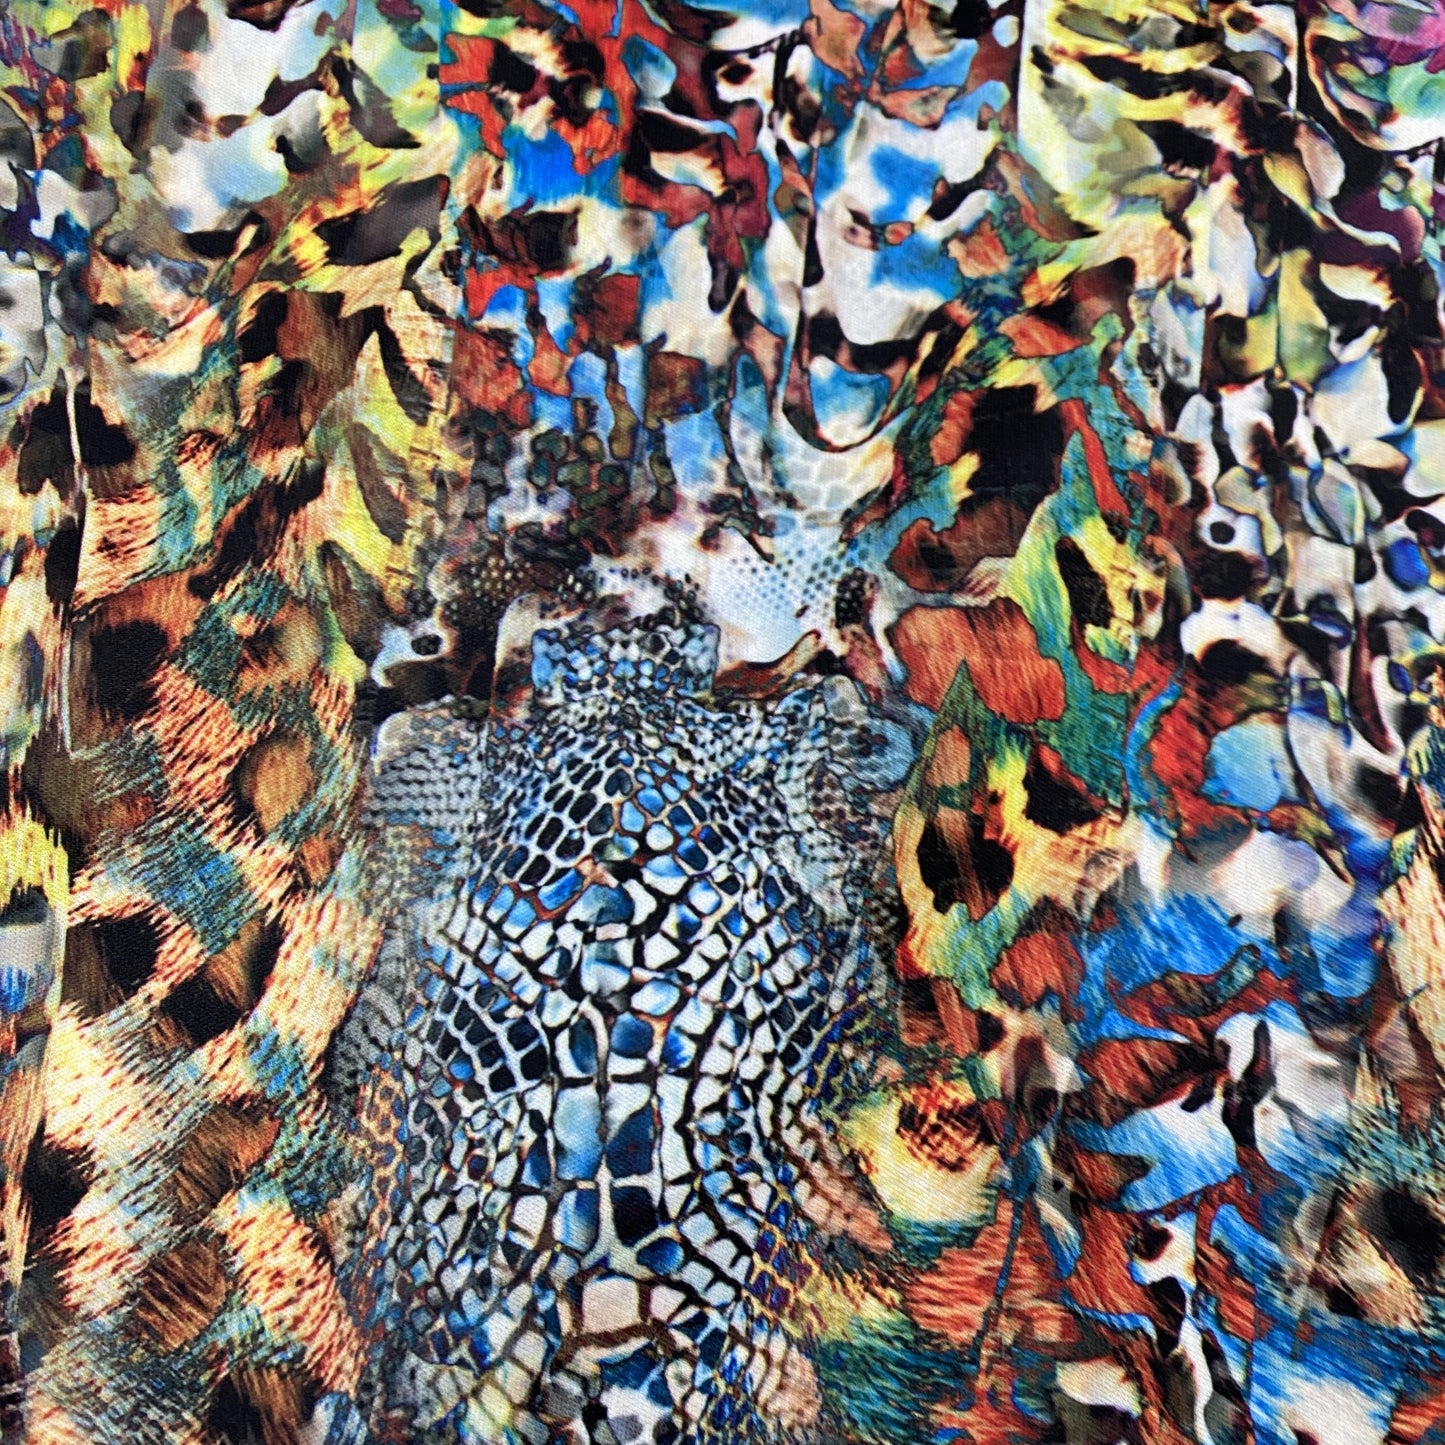 Animal Kaleidoscope 1 mil PUL - Made in the USA - Nature's Fabrics